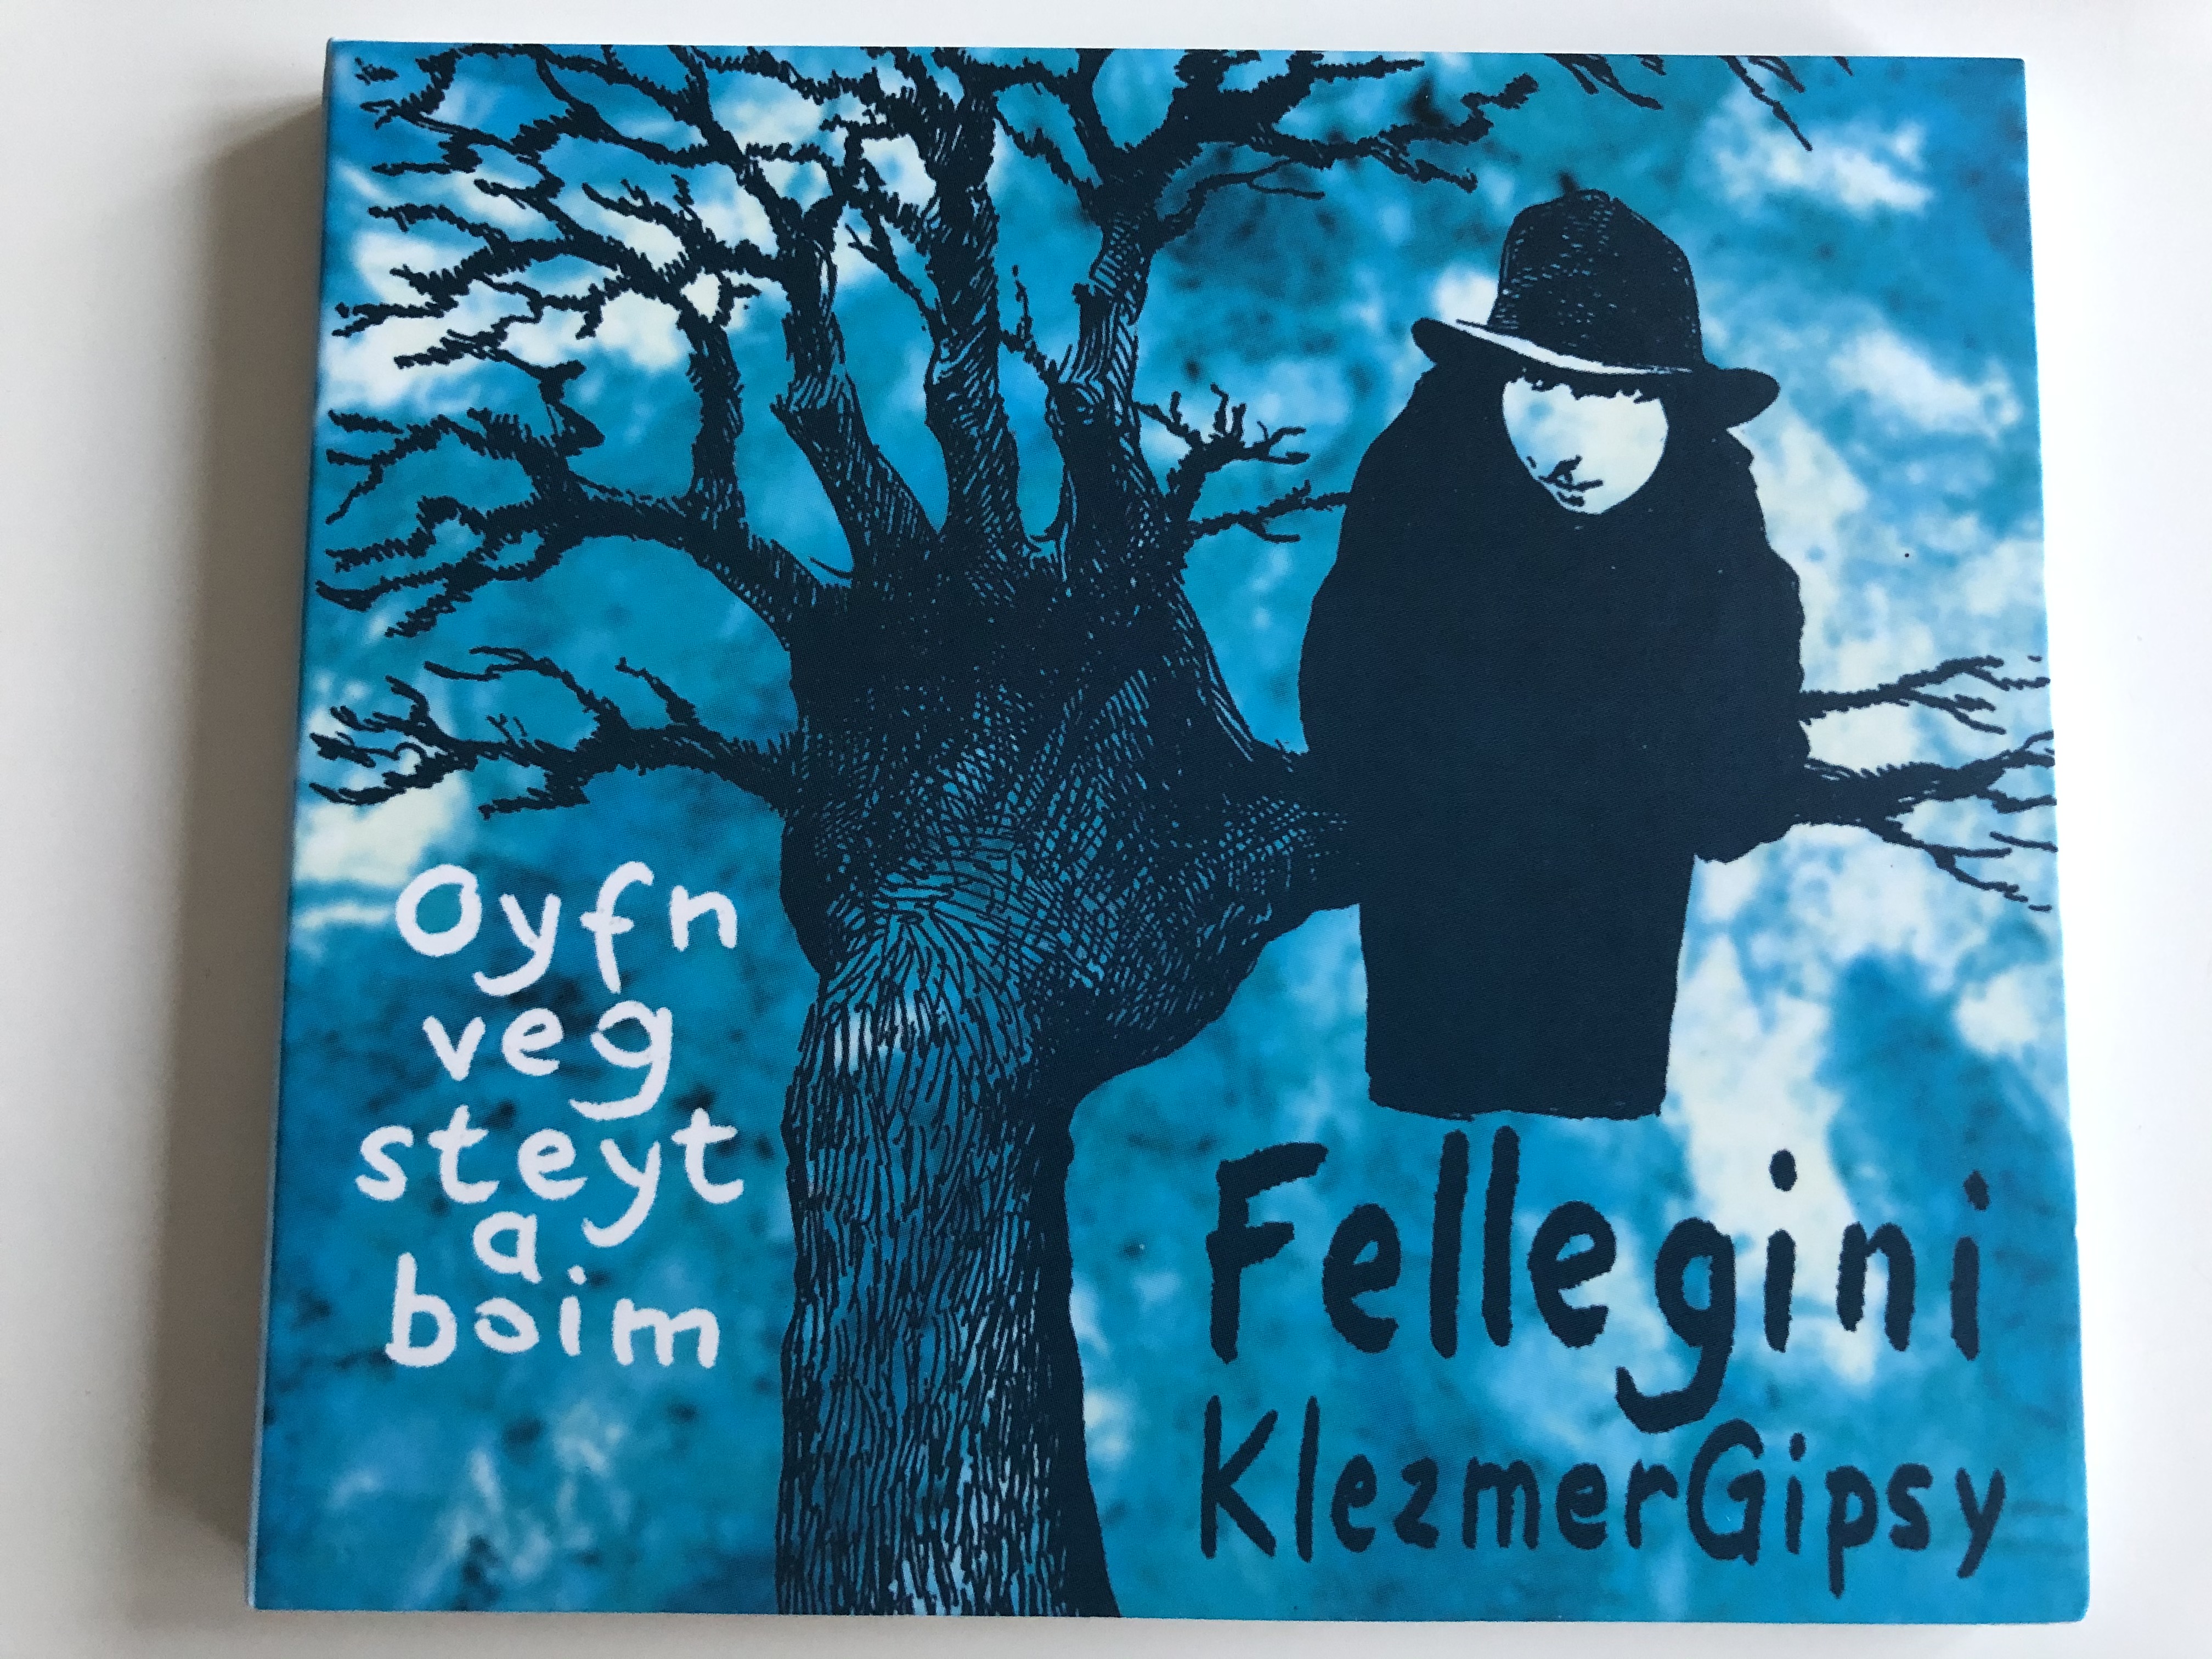 fellegini-klezmer-gipsy-oyfn-veg-steyt-a-boim-gryllus-audio-cd-2005-gcd-047-1-.jpg